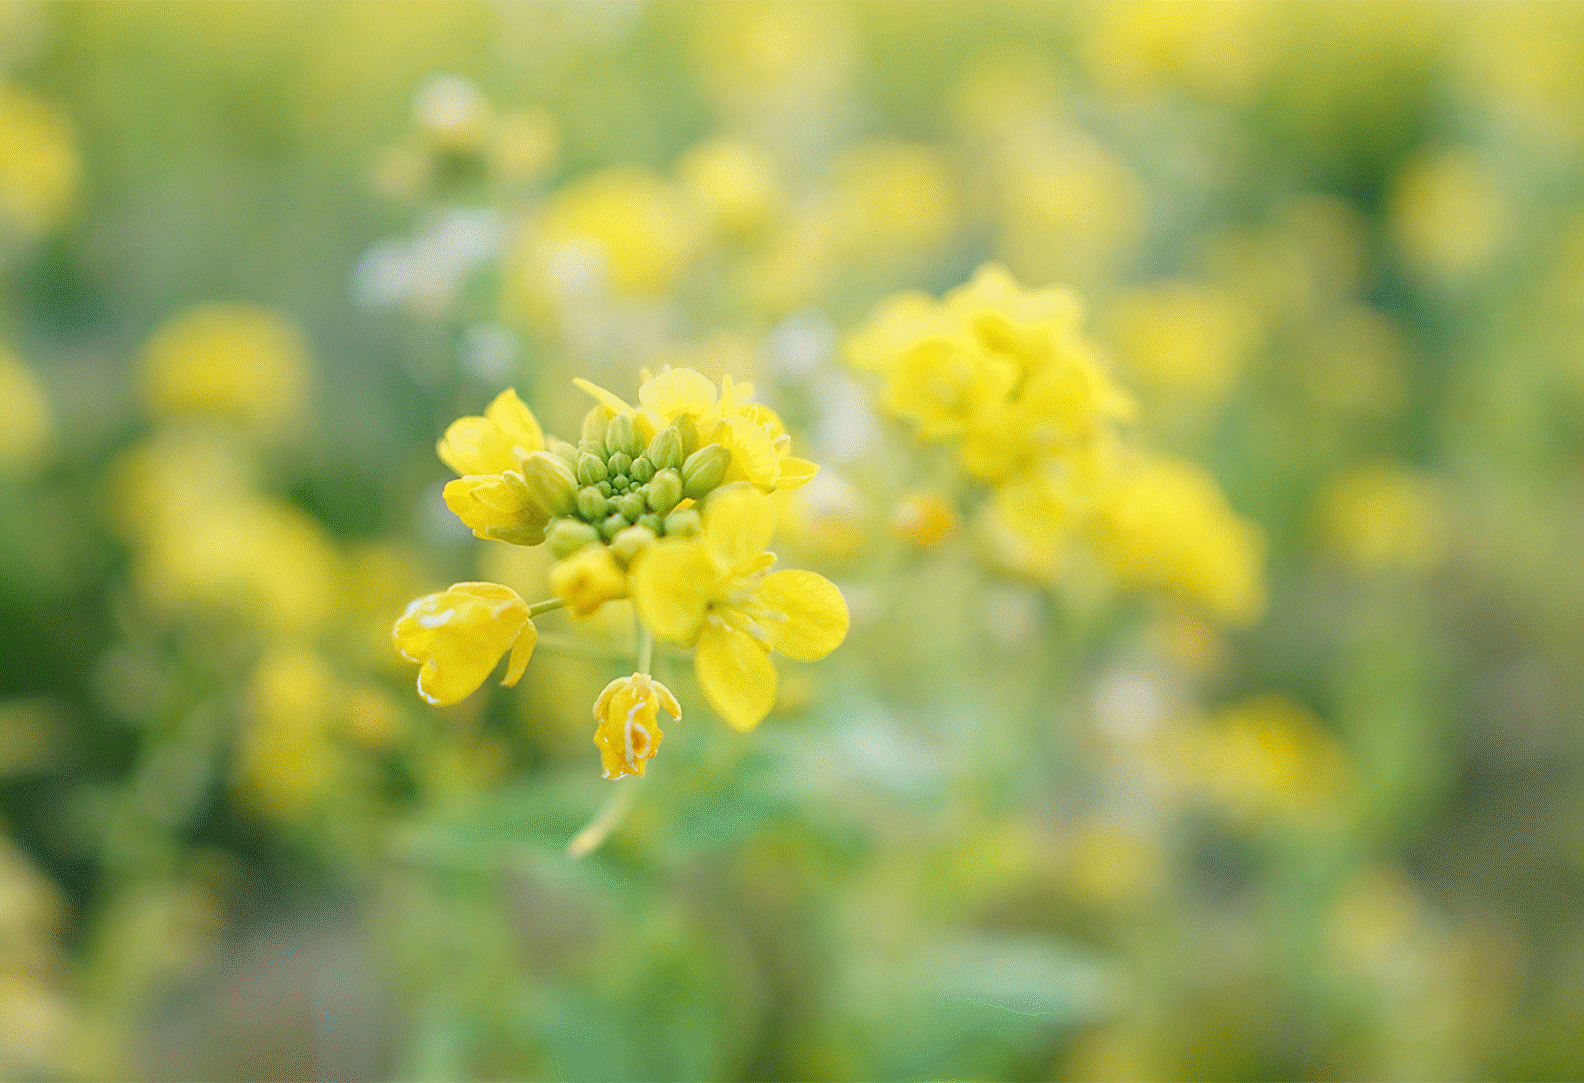 Слика од жолти цветови